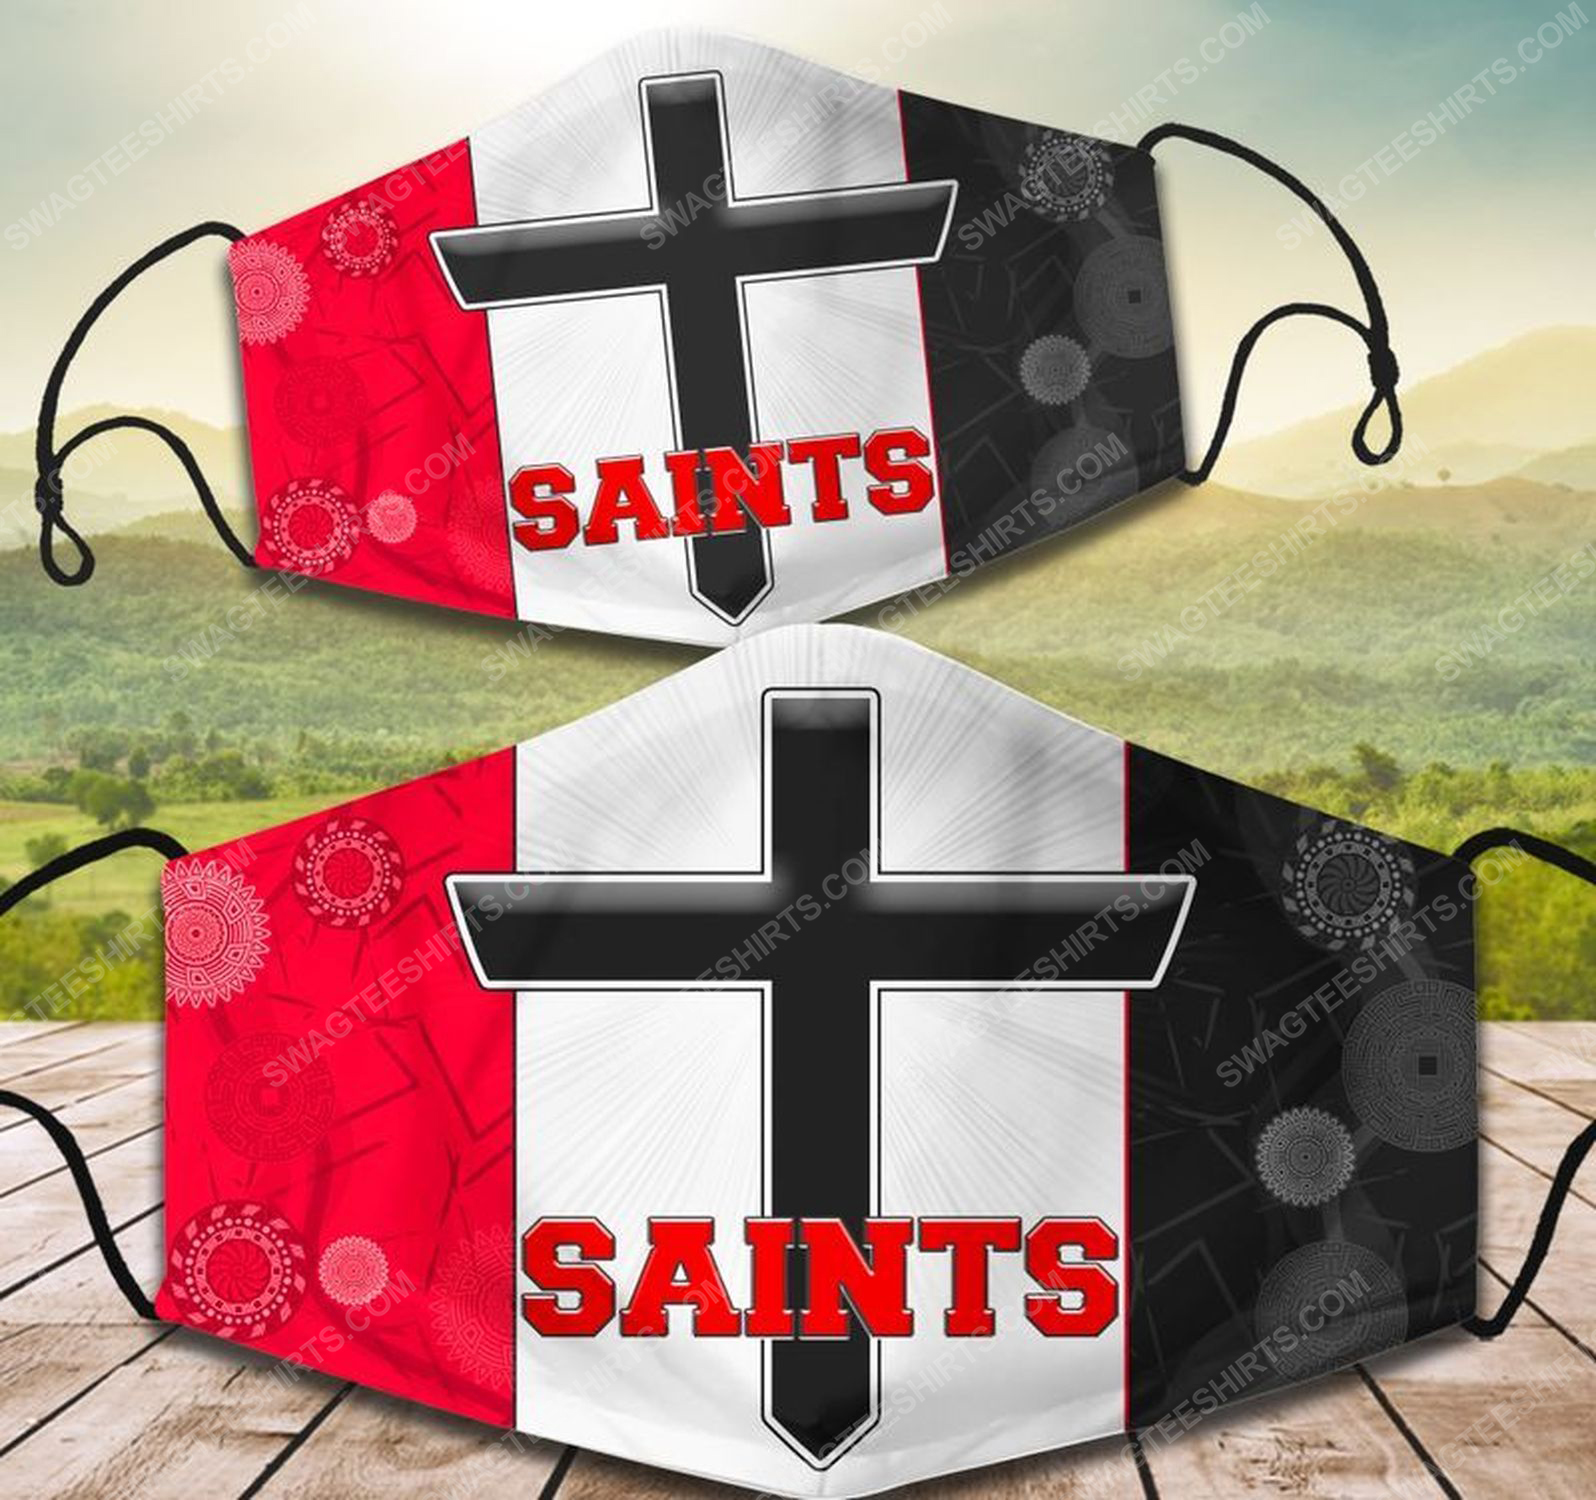 Saints kilda football club face mask